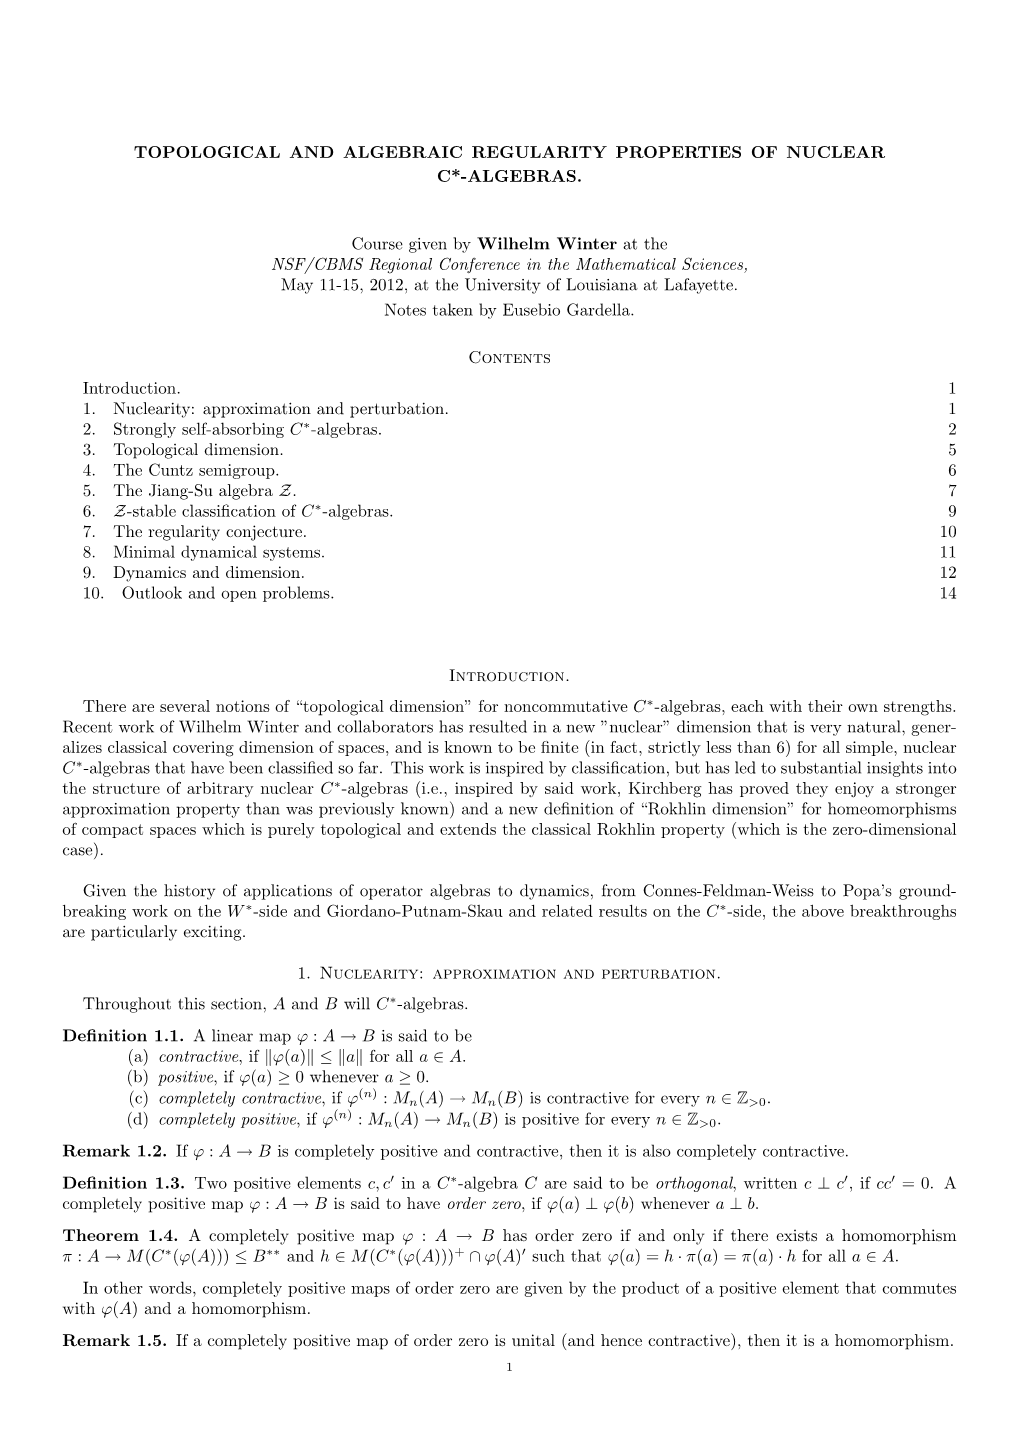 Topological and Algebraic Regularity Properties of Nuclear C*-Algebras